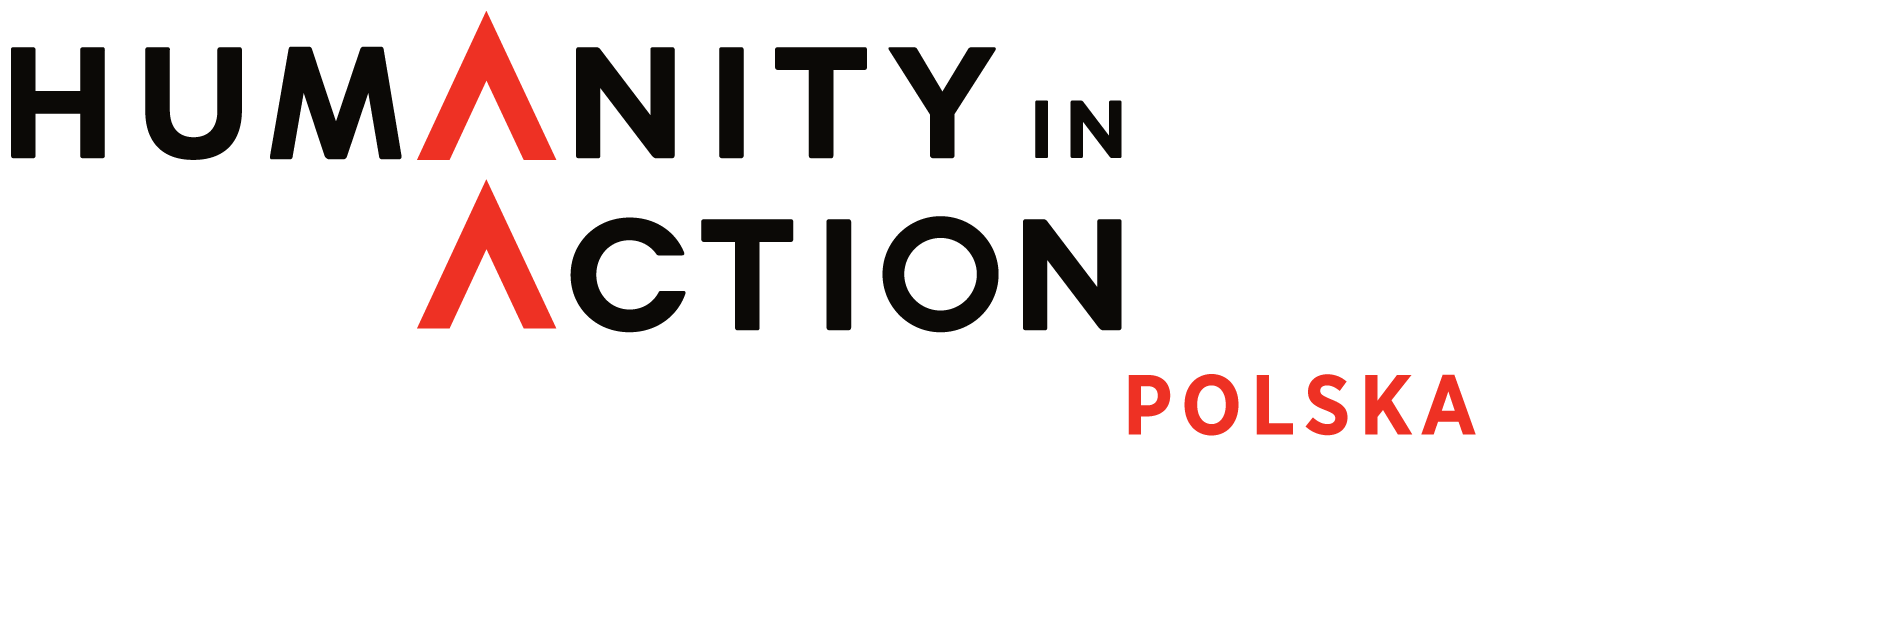 Poland Logo - Poland - Humanity in Action